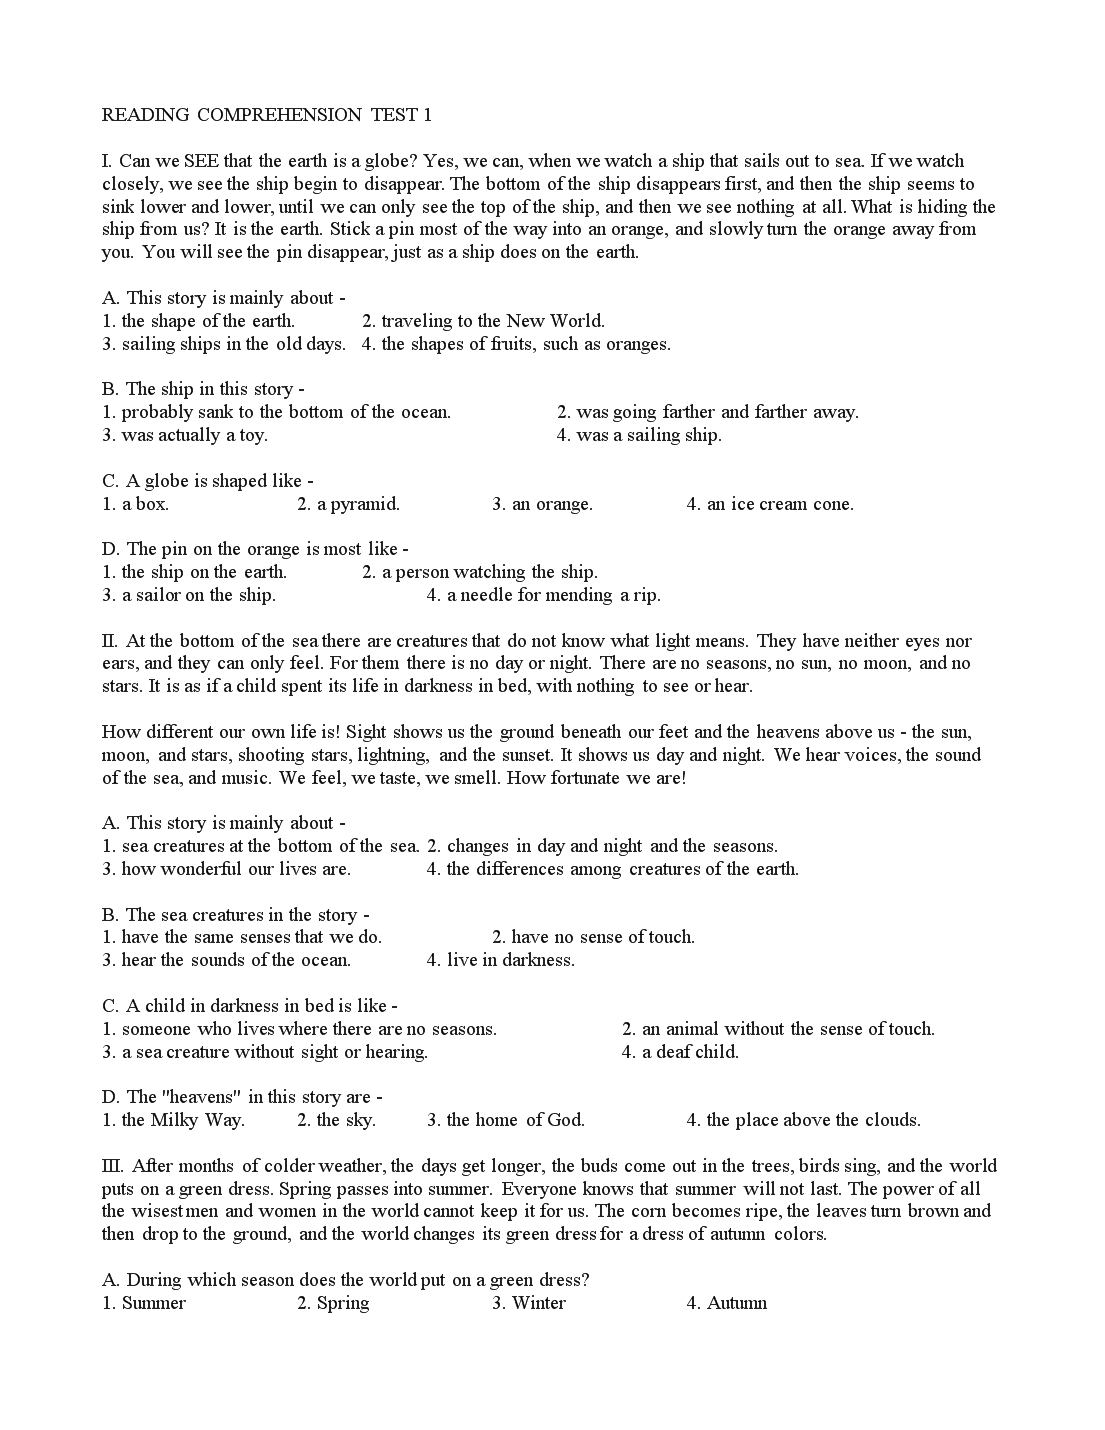 Reading comprehension test 1 trang 1